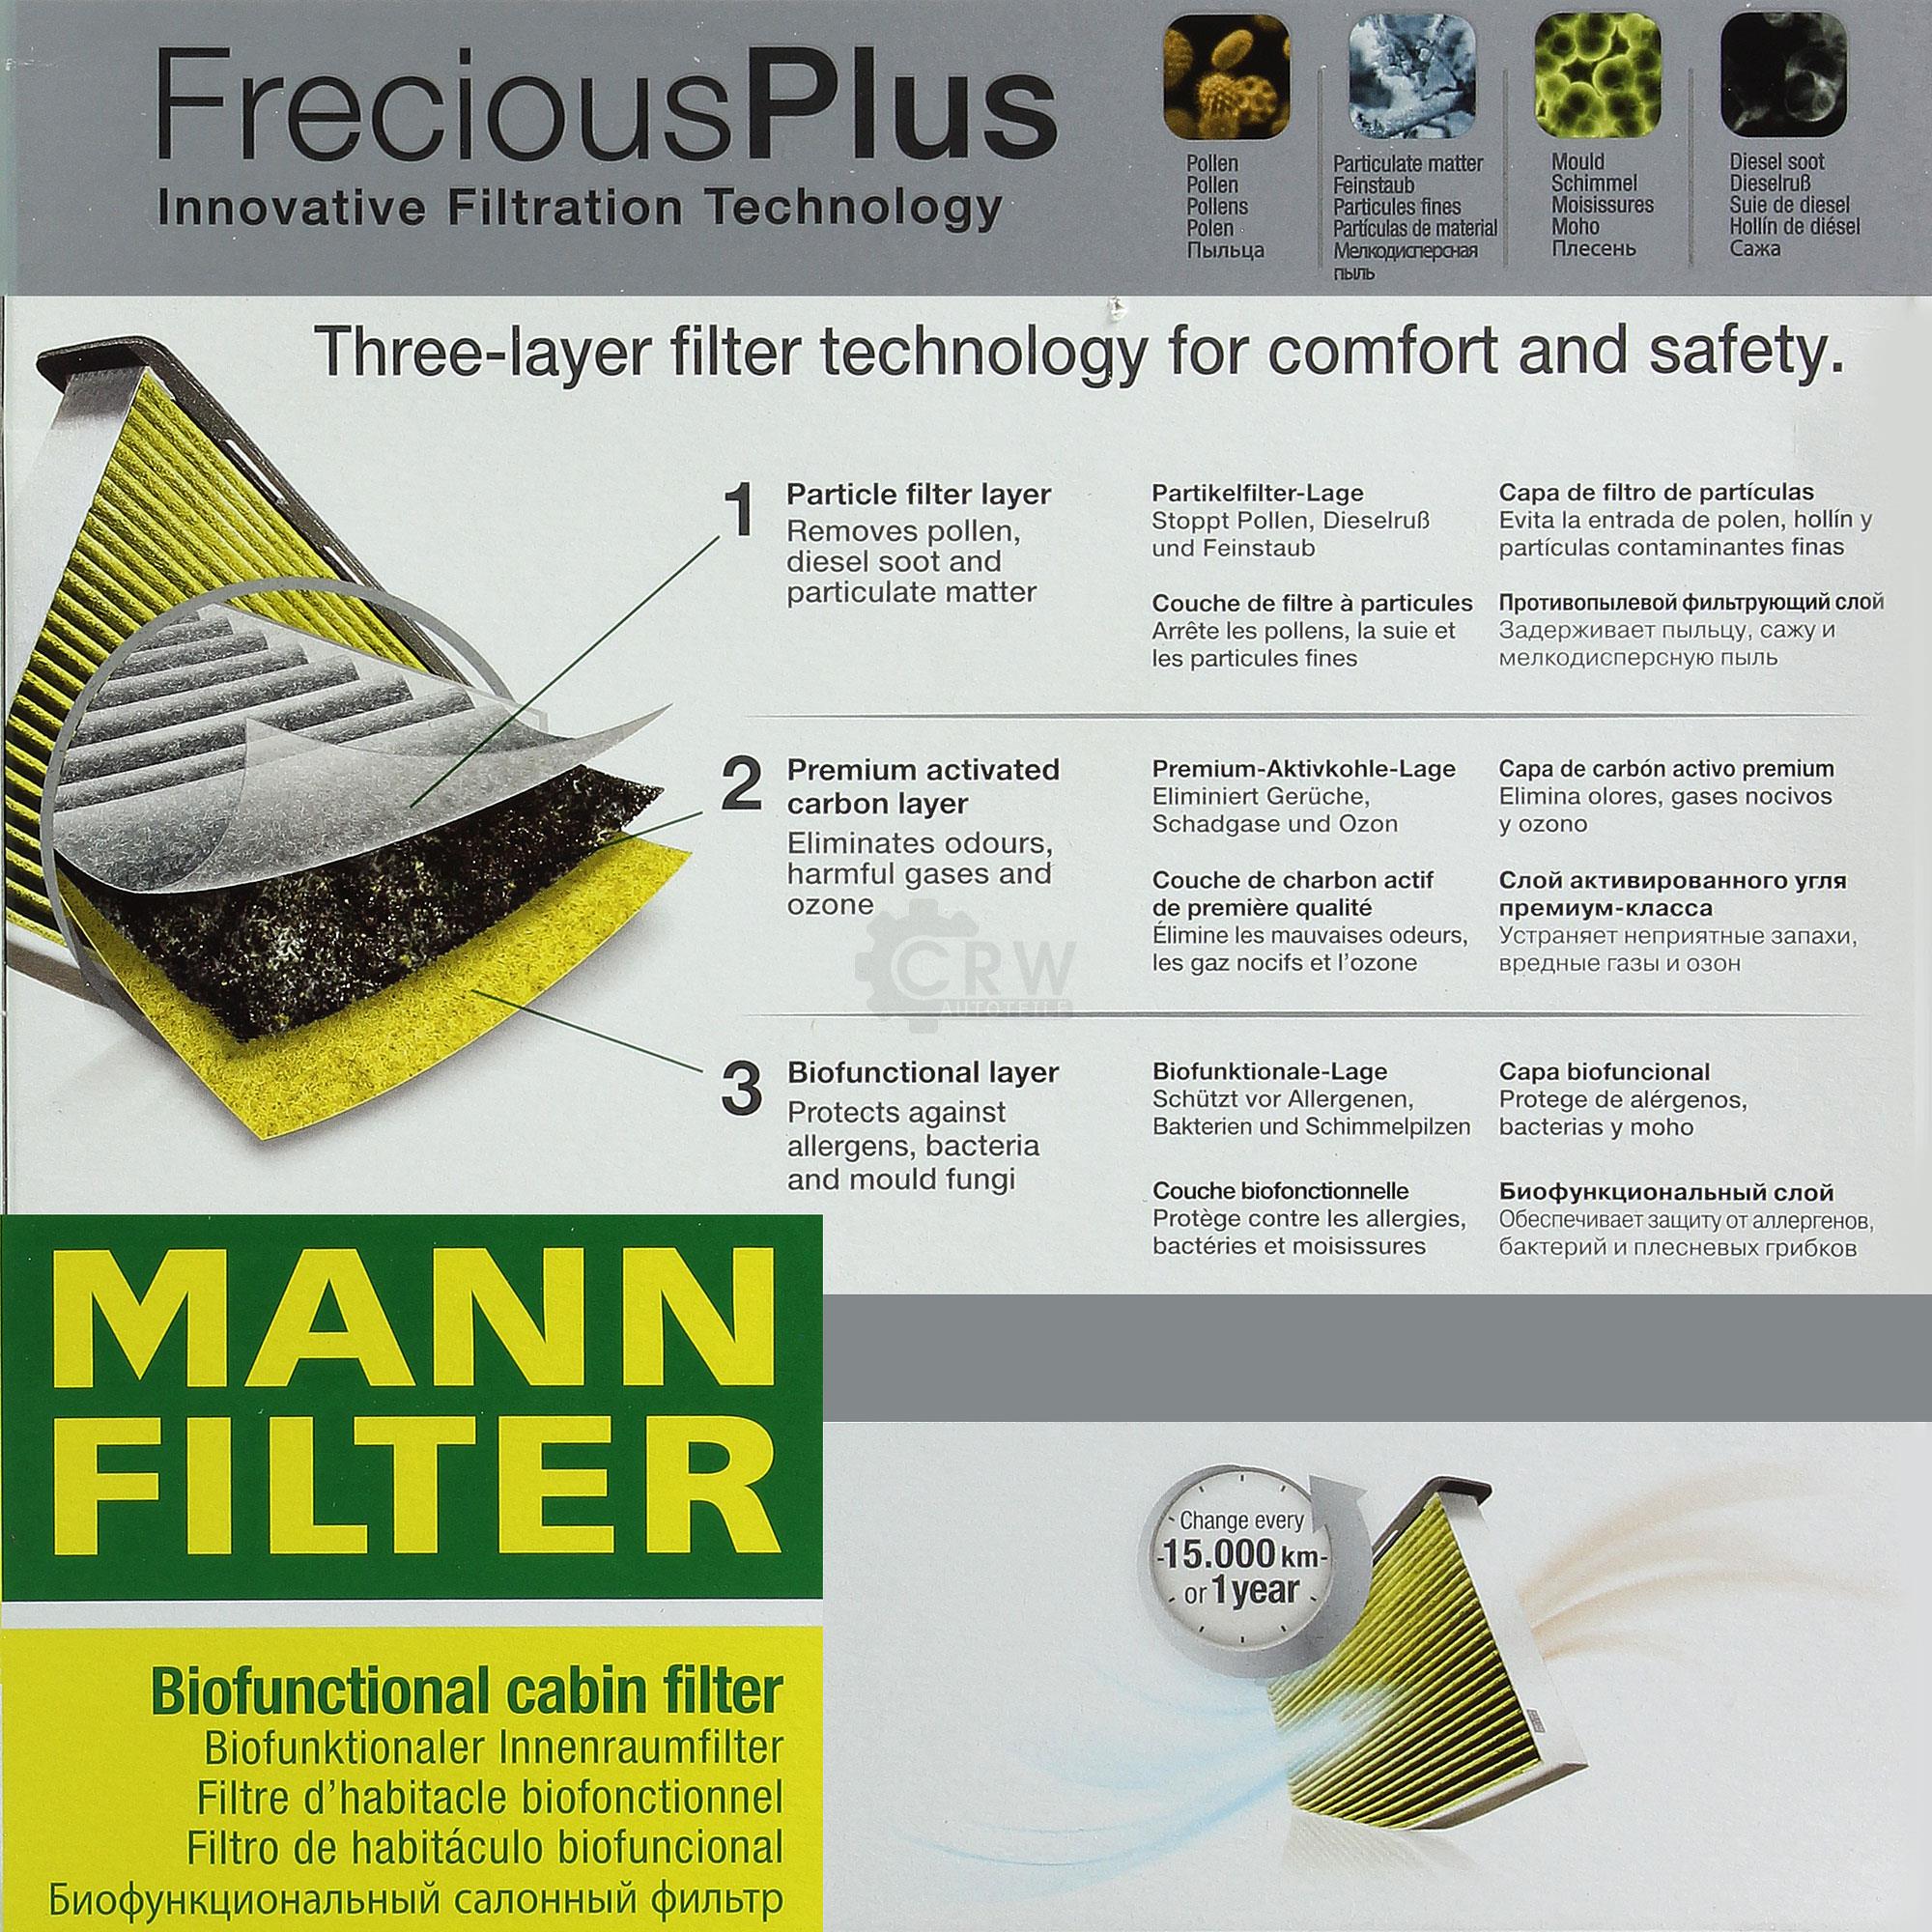 MANN-Filter Innenraumfilter Biofunctional für Allergiker FP 3023-2